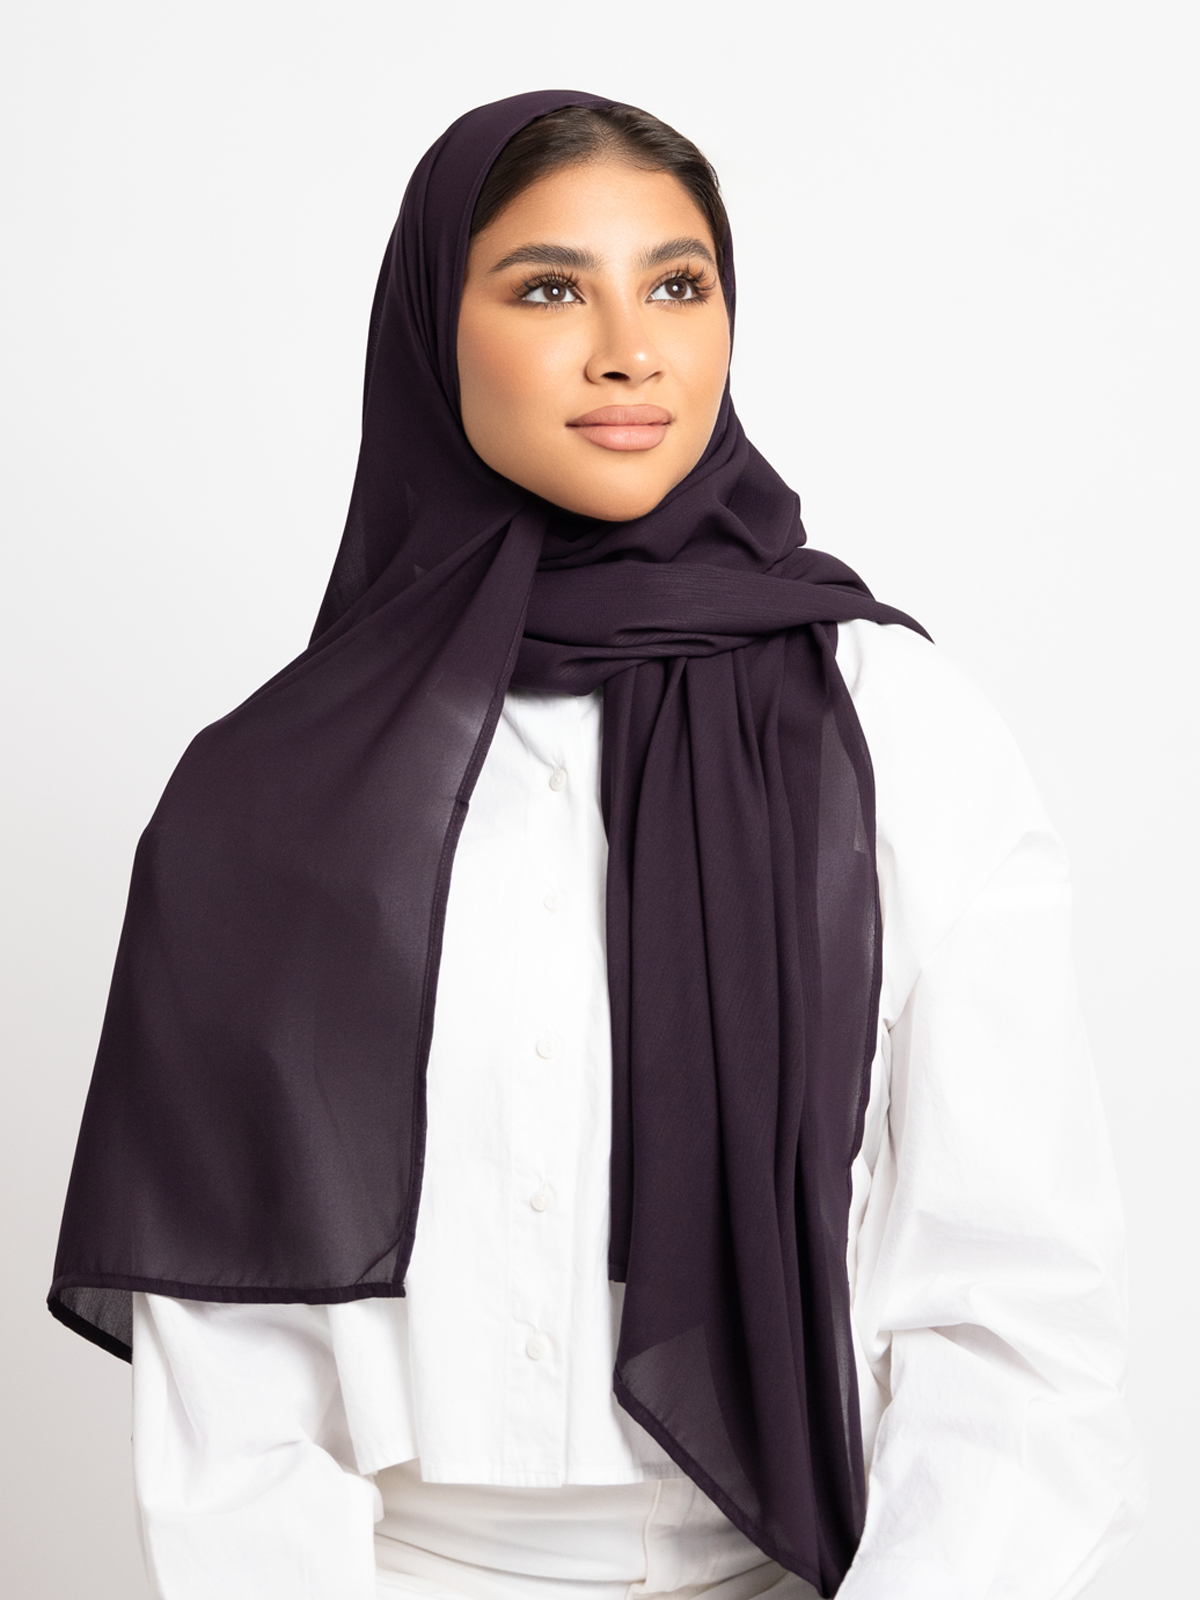 Luxurious chiffon hijab plain tarha 200 cm long mauve color high quality material online in ksa by kaafmeem